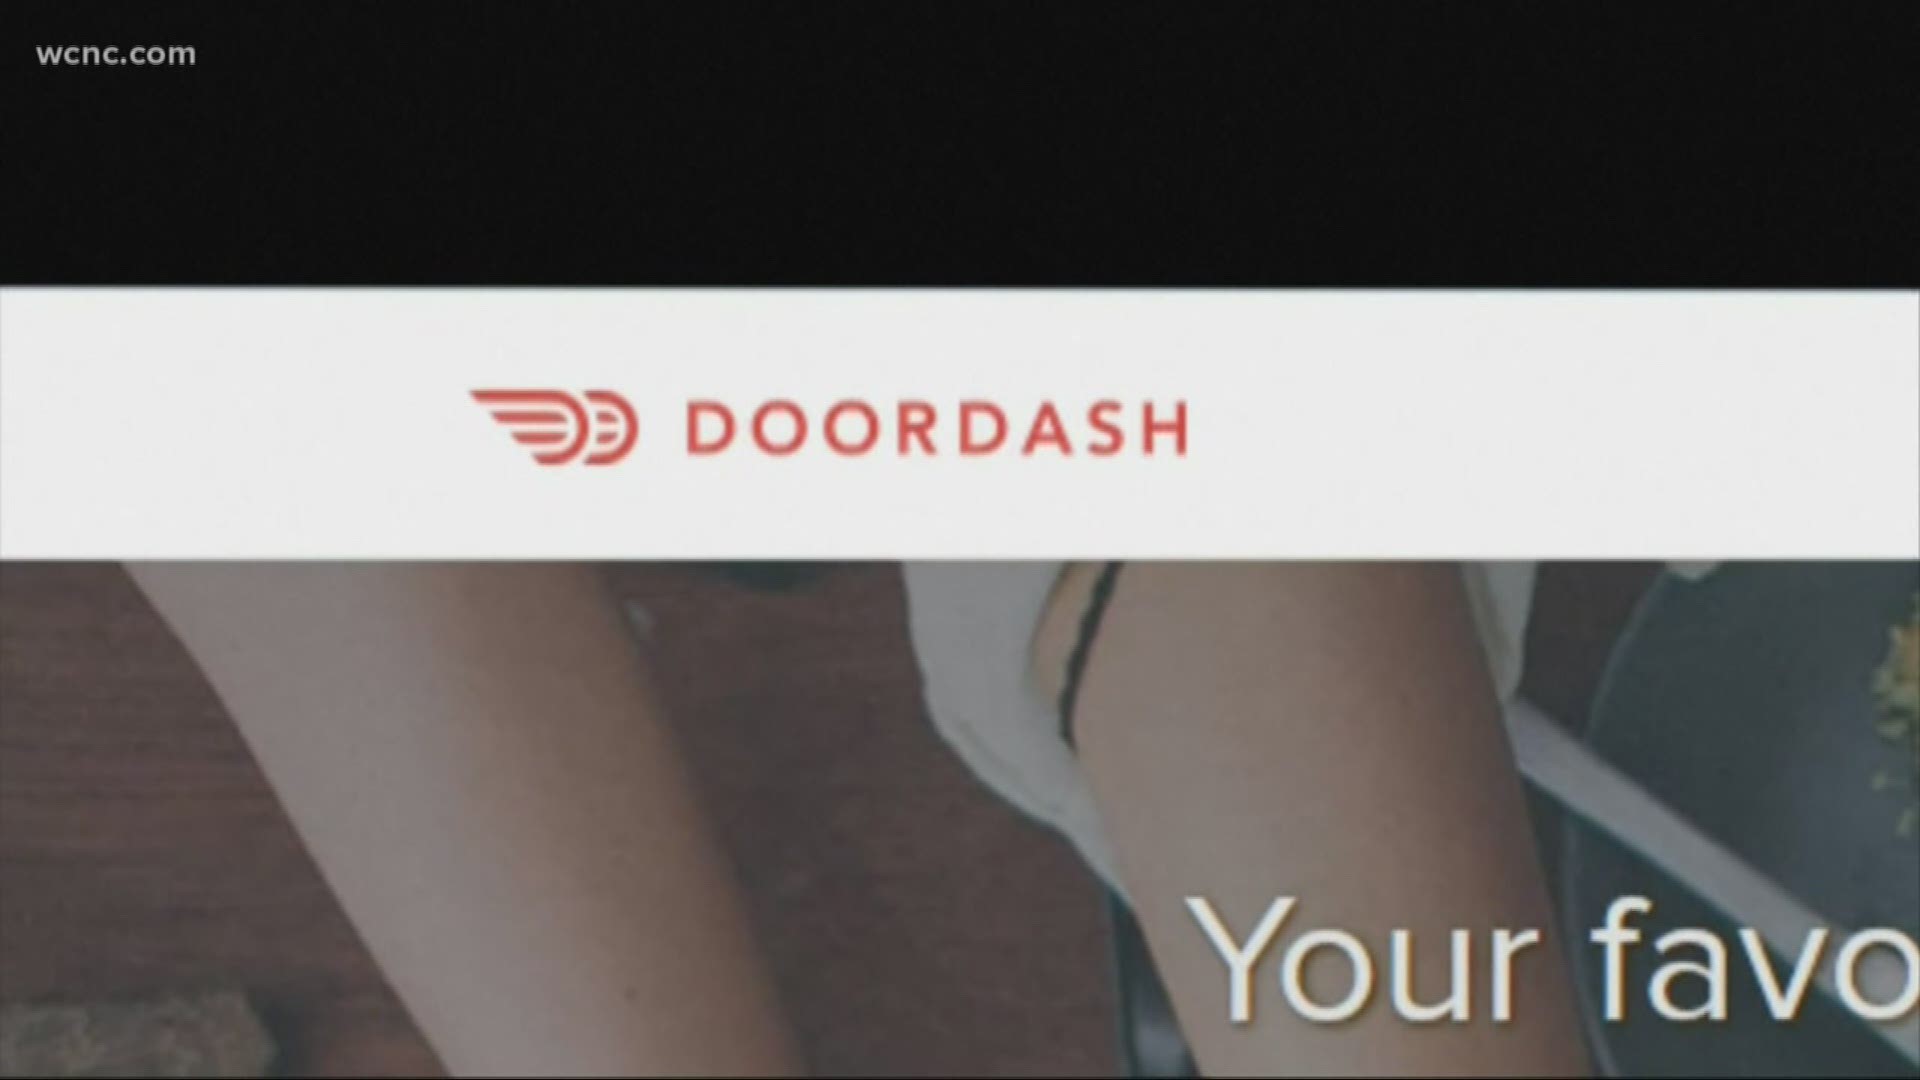 DoorDash confirms data breach affected 4.9 million customers